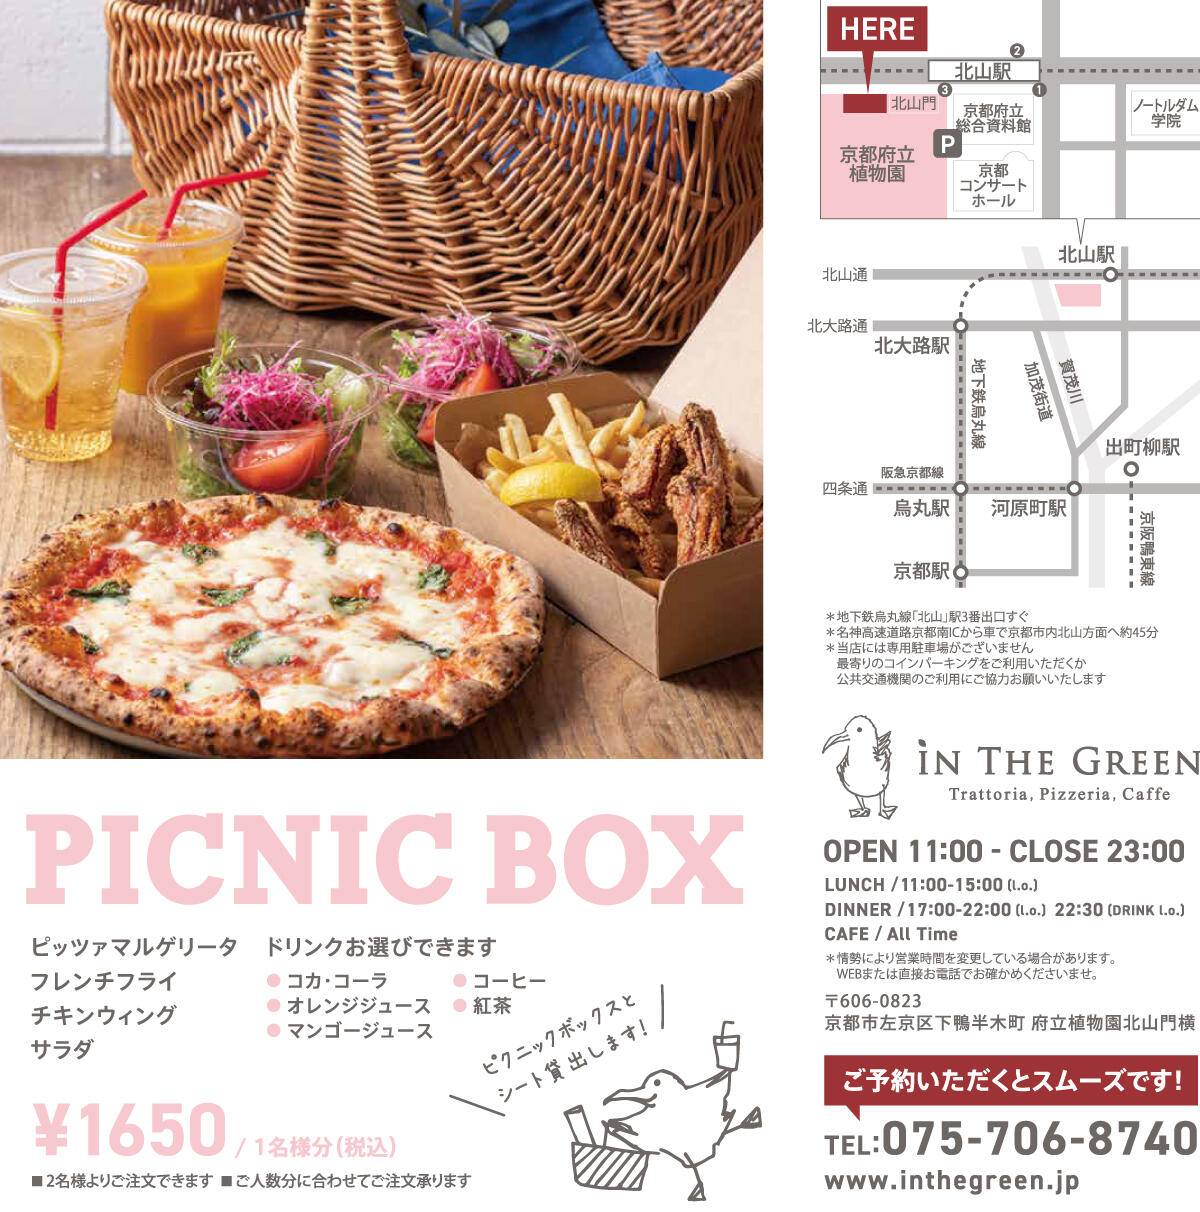 picnicbox02.jpg